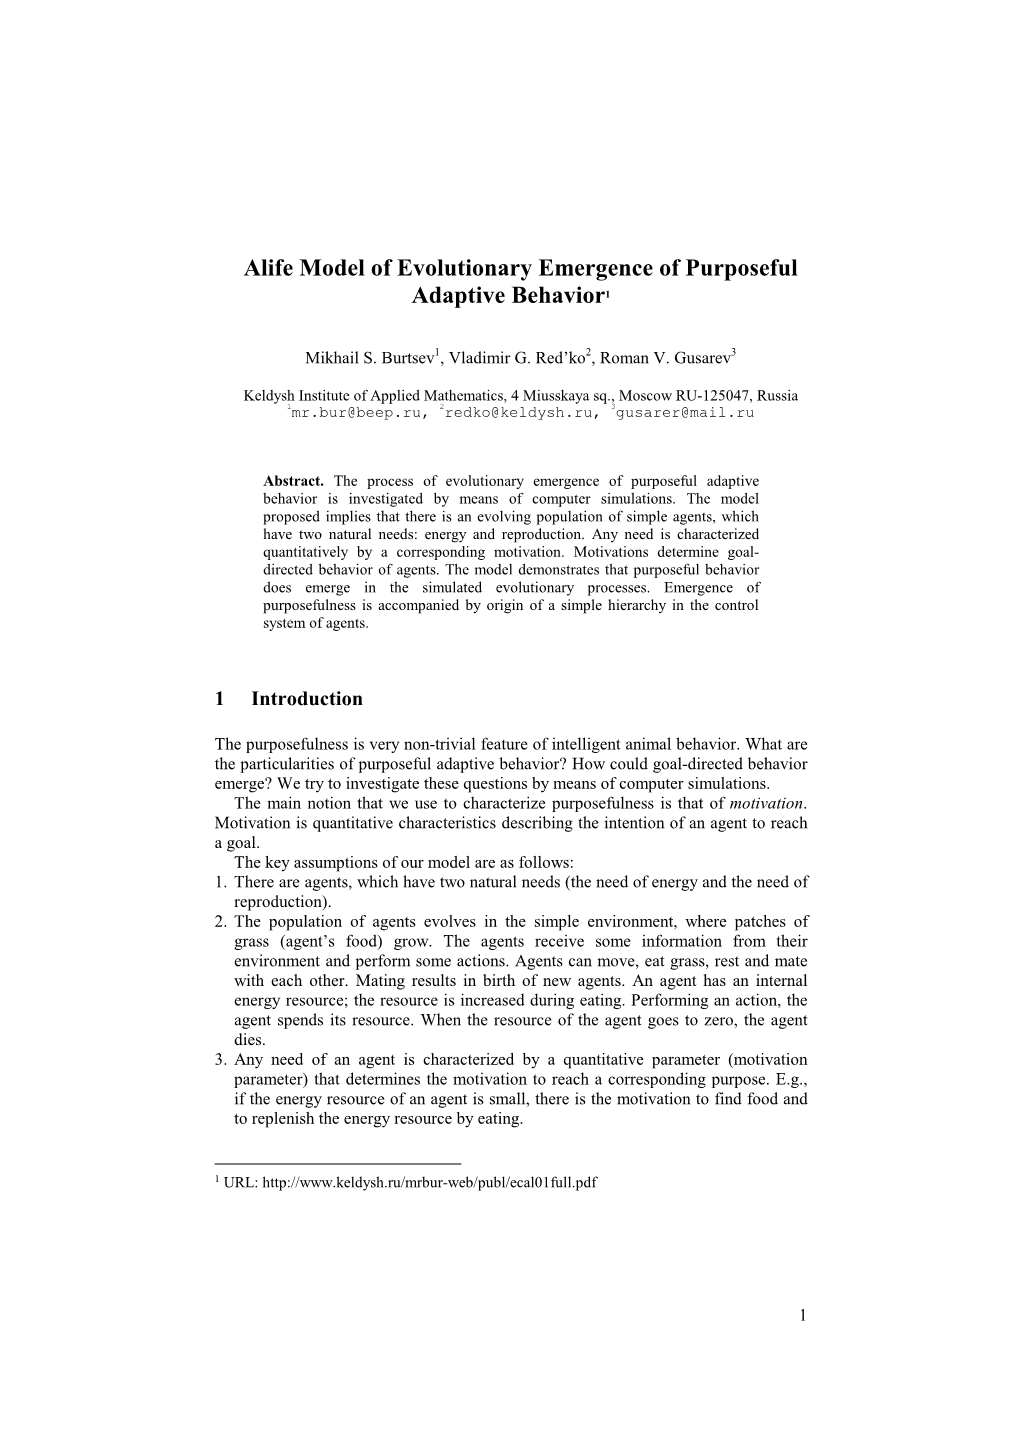 Alife Model of Evolutionary Emergence of Purposeful Adaptive Behavior1